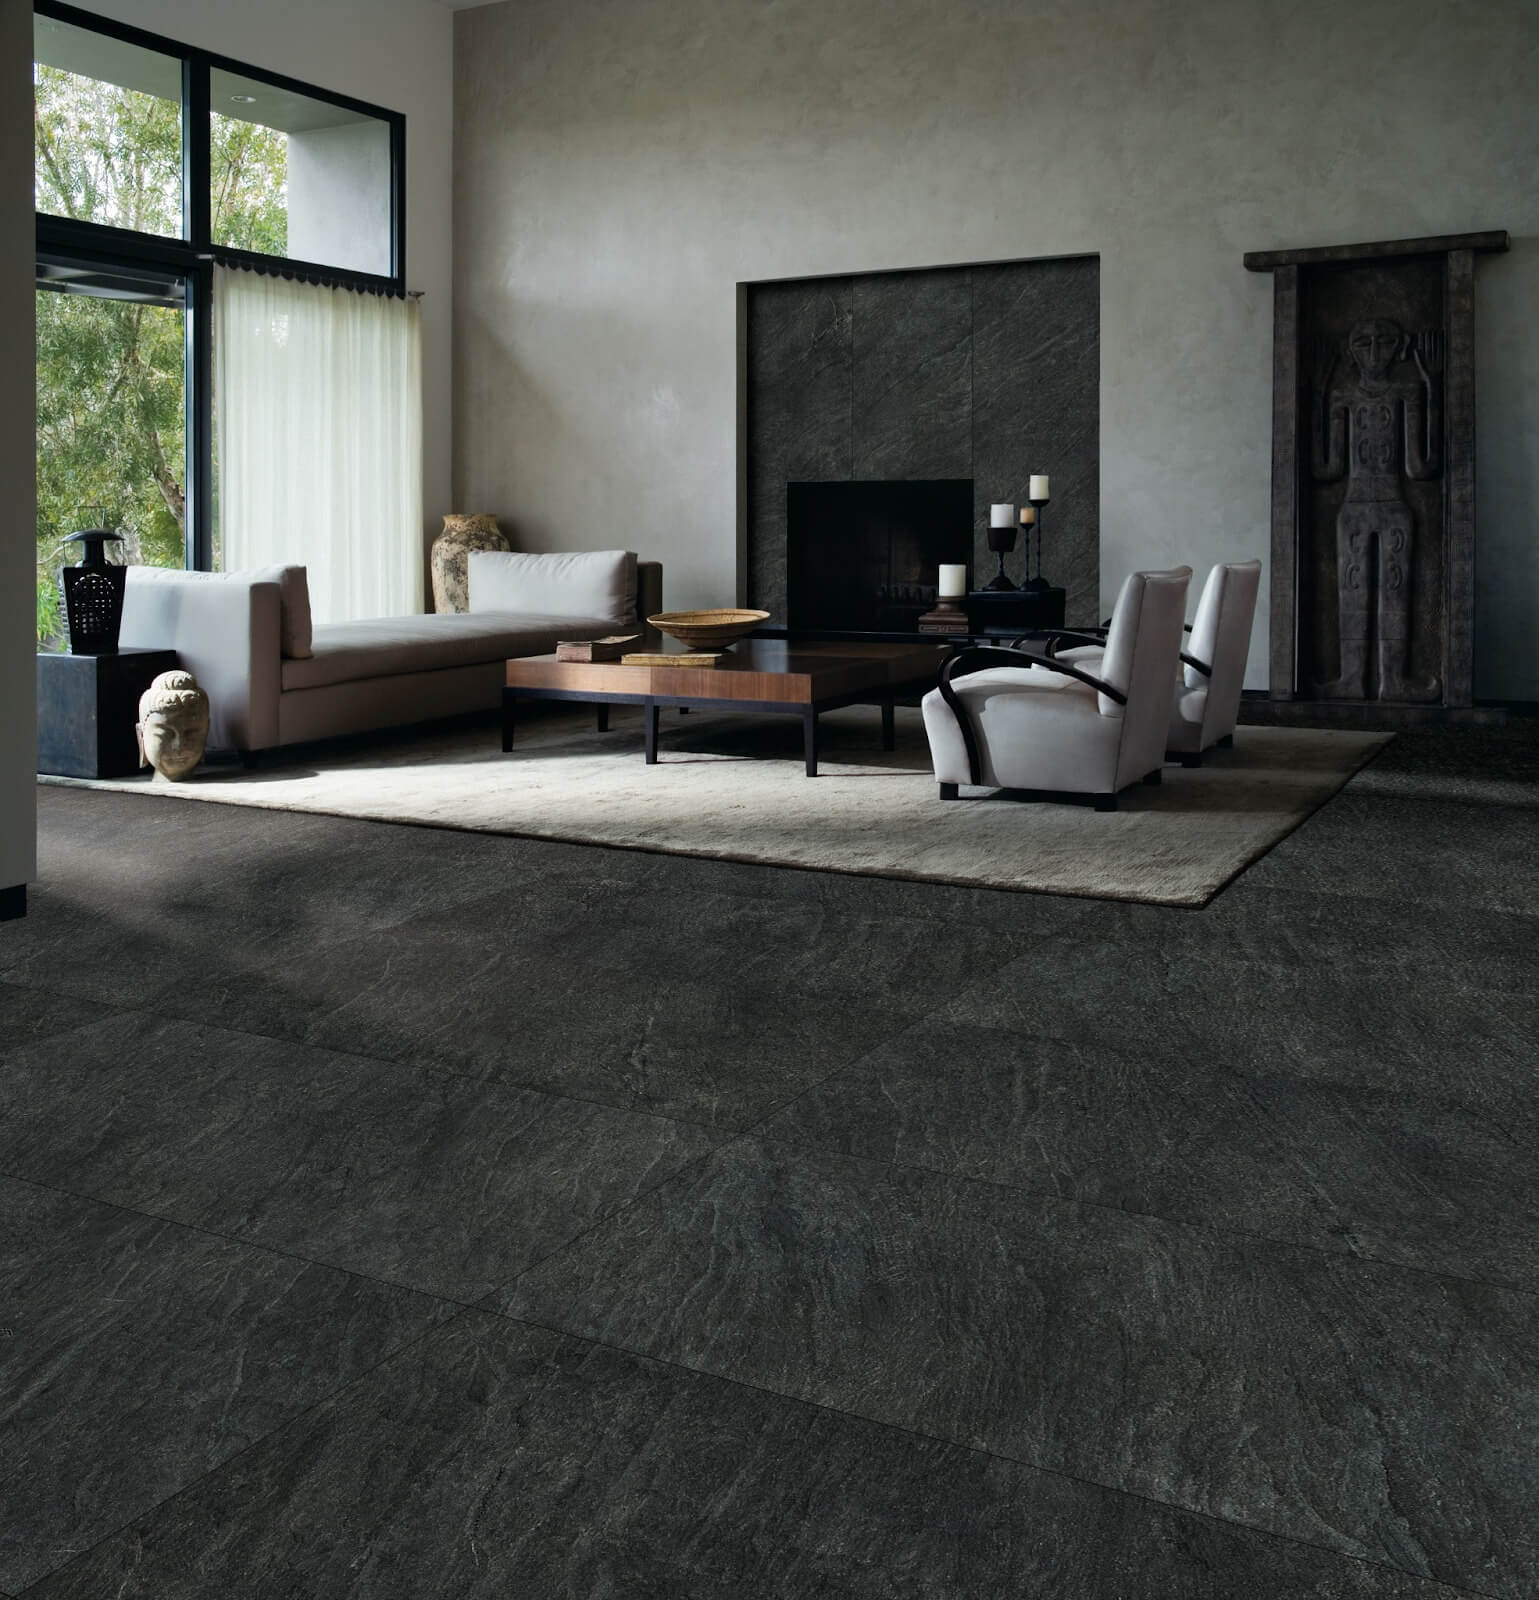 Stone-look XXL tile flooring